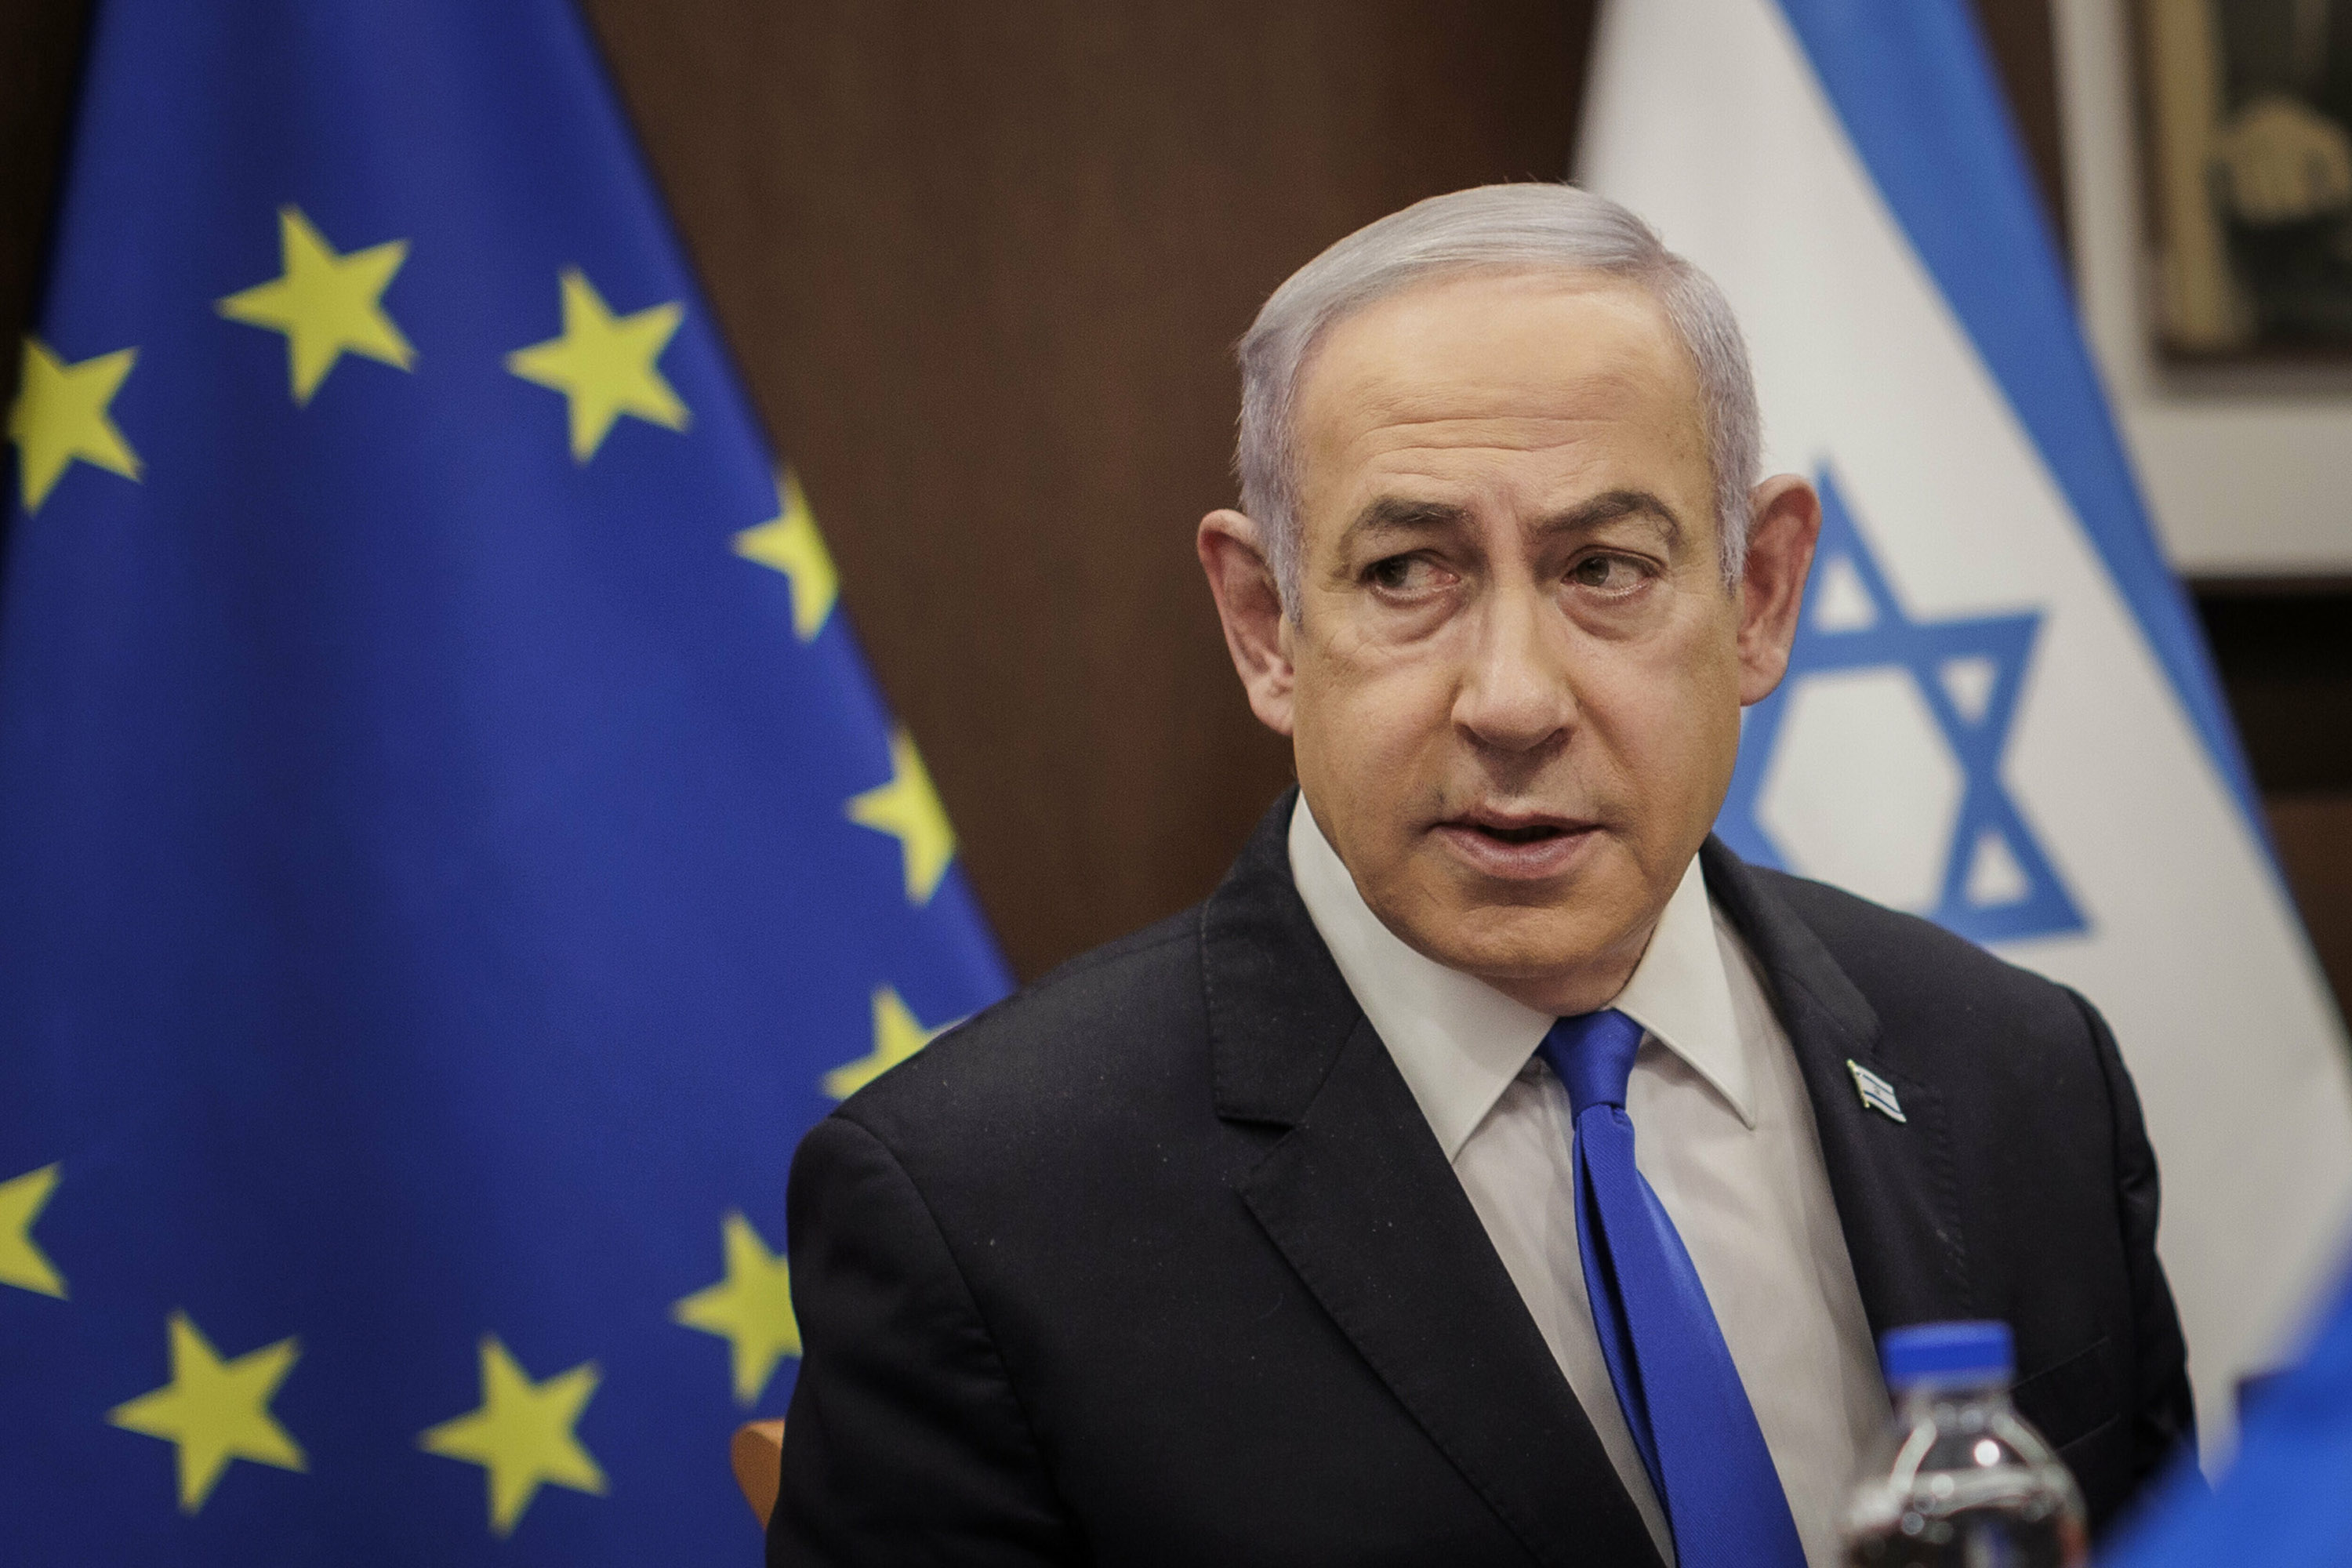 Israeli Prime Minister Benjamin Netanyahu is seen during a meeting in Jerusalem on April 17.